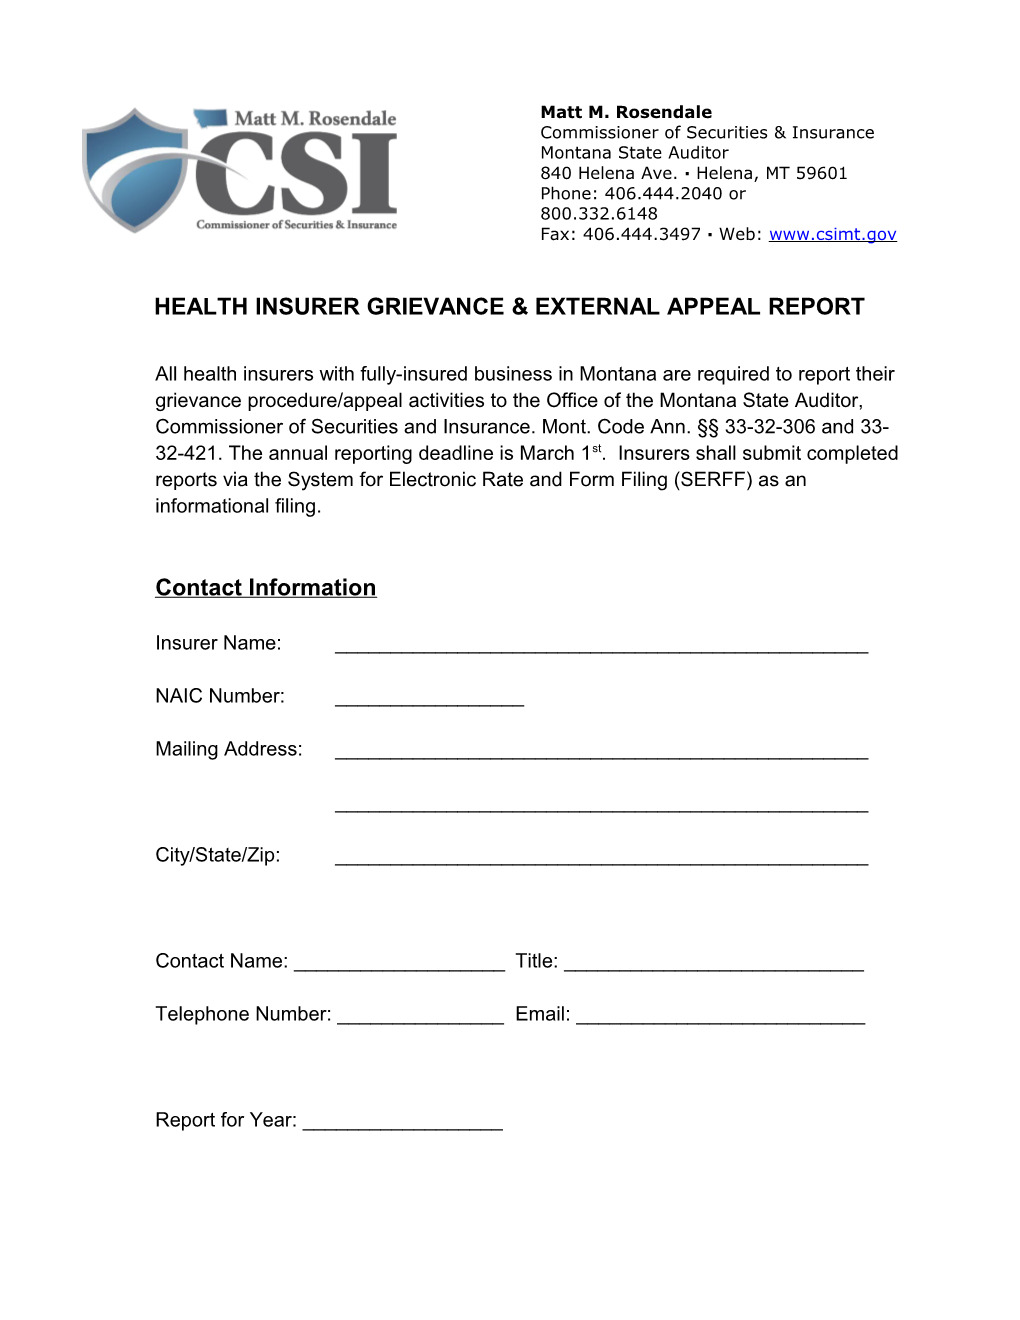 Health Insurer Grievance & External Appeal Report